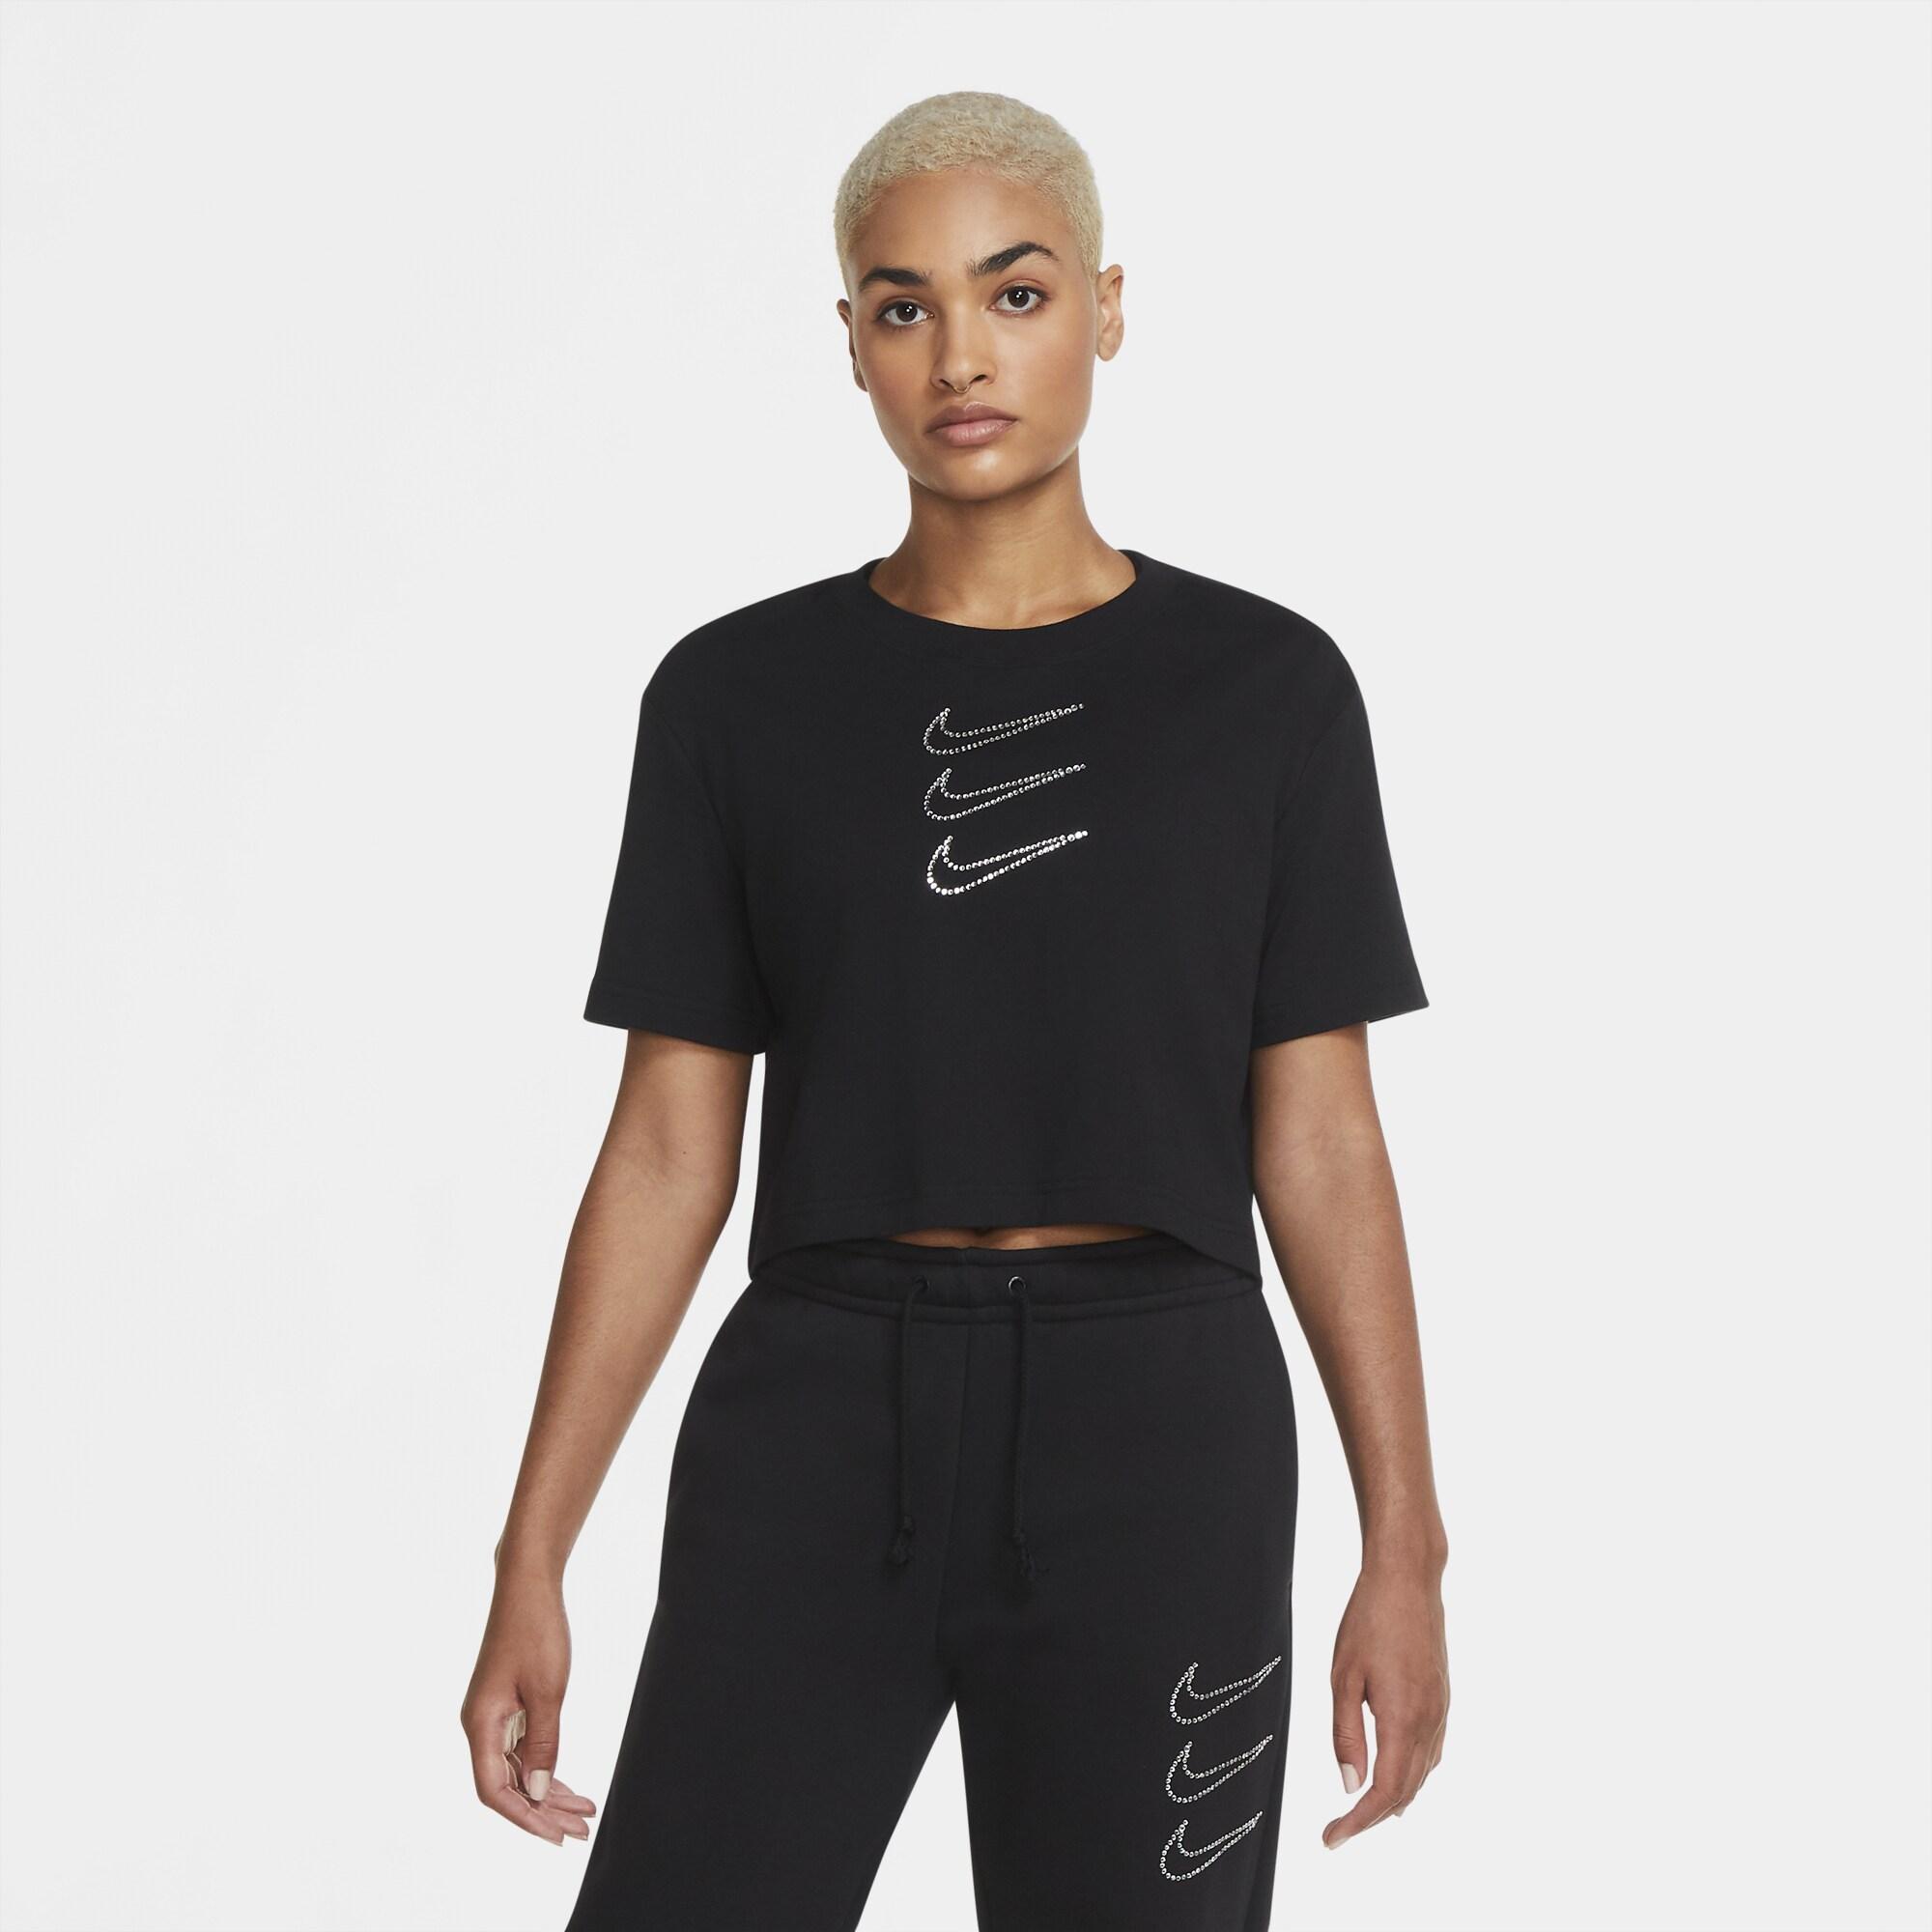 Nike Cotton Y2k 3 Crop T-shirt in Black/Black (Black) - Lyst